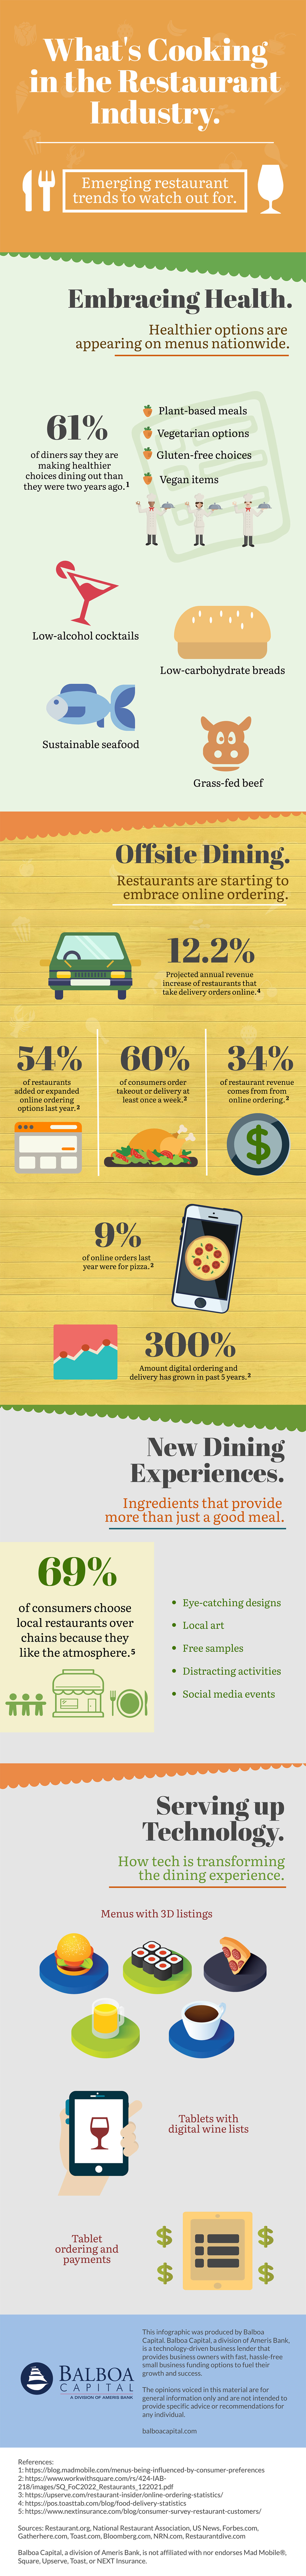 Restaurant Trends Infographic